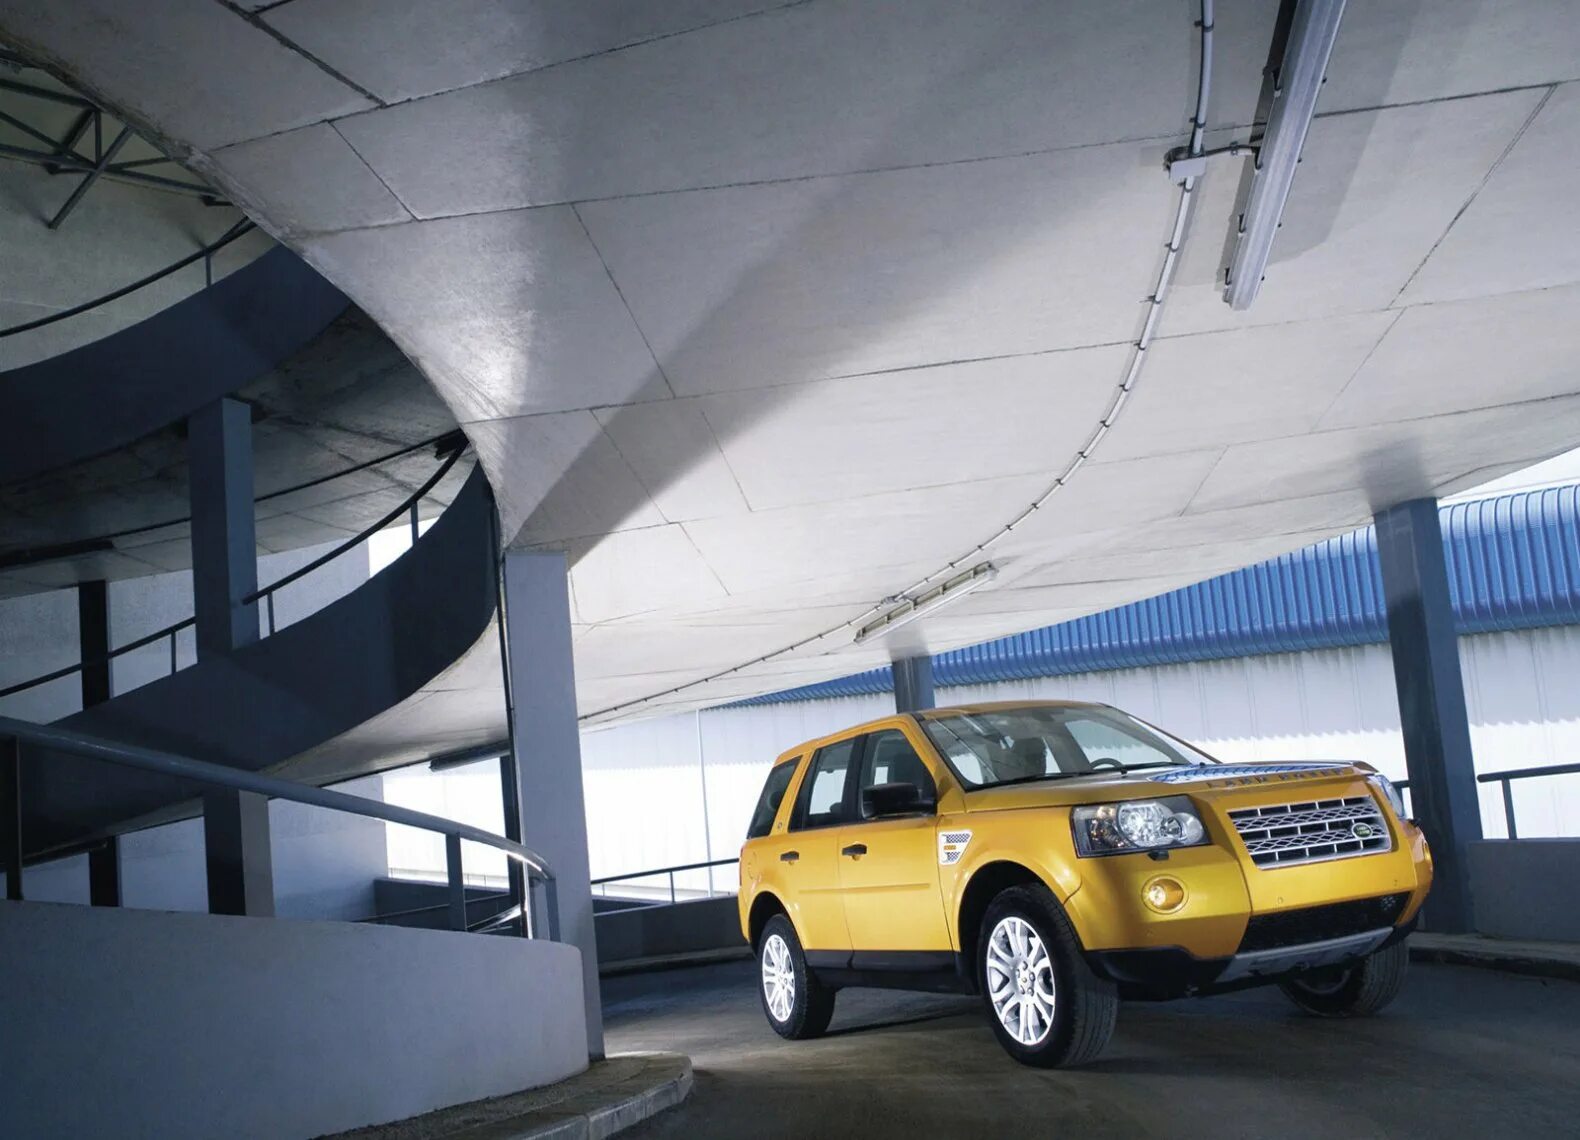 Фриландер. Ленд Ровер Фрилендер 2 поколения. Ленд Ровер Фрилендер поколения. Ленд Ровер Фрилендер 2 поколение 2011. Land Rover Freelander 2 желтый.